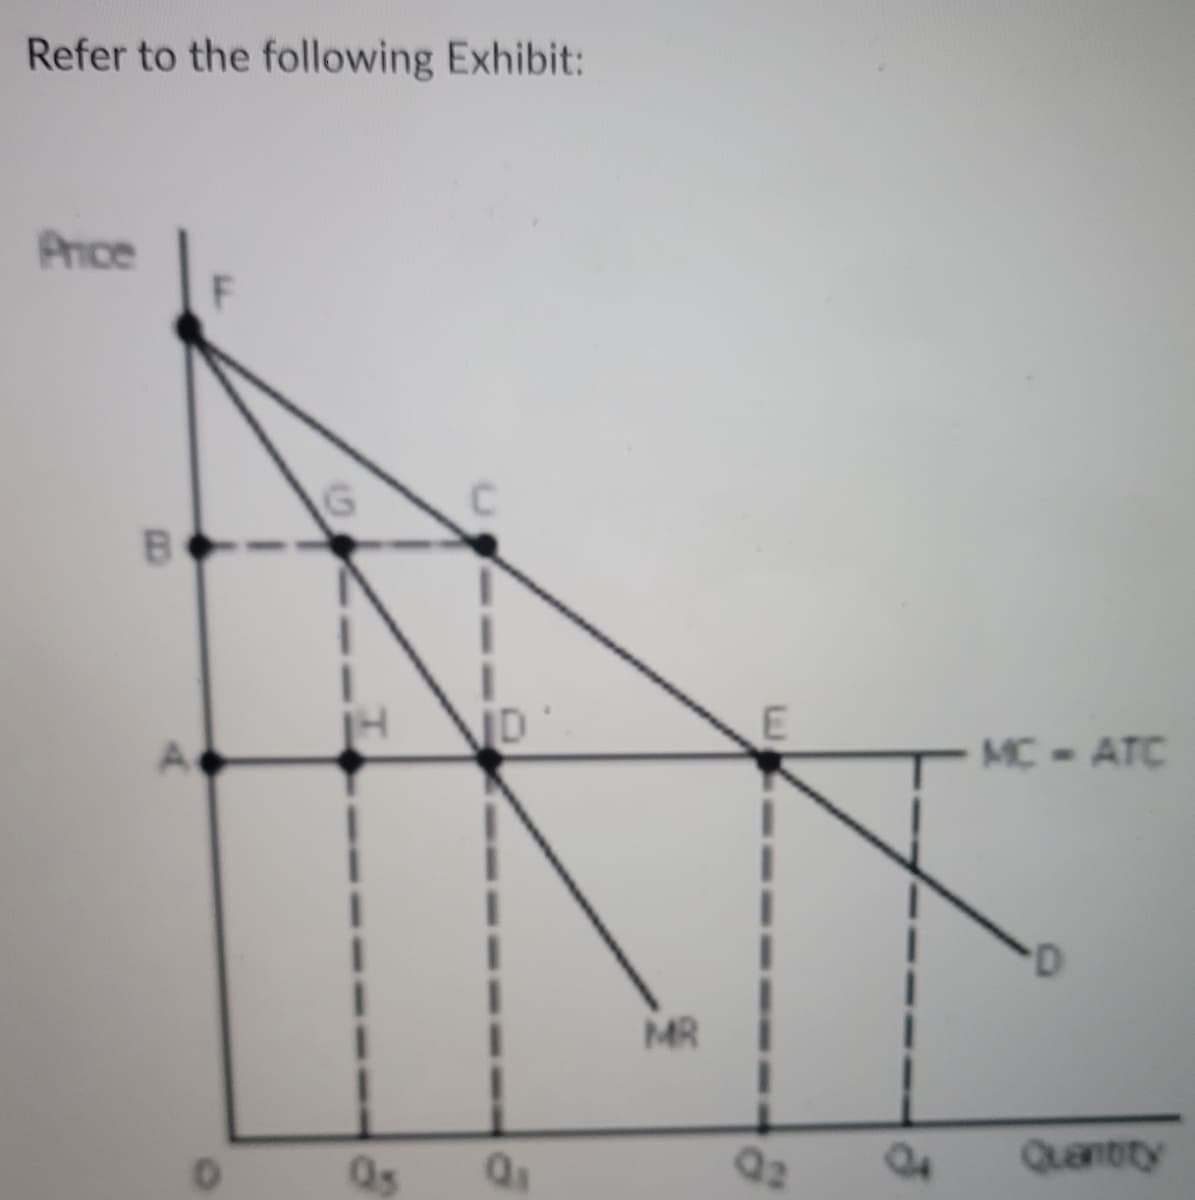 Refer to the following Exhibit:
Price
C.
3.
ID
MC-ATC
MR
Q2
Quantity
Q5
